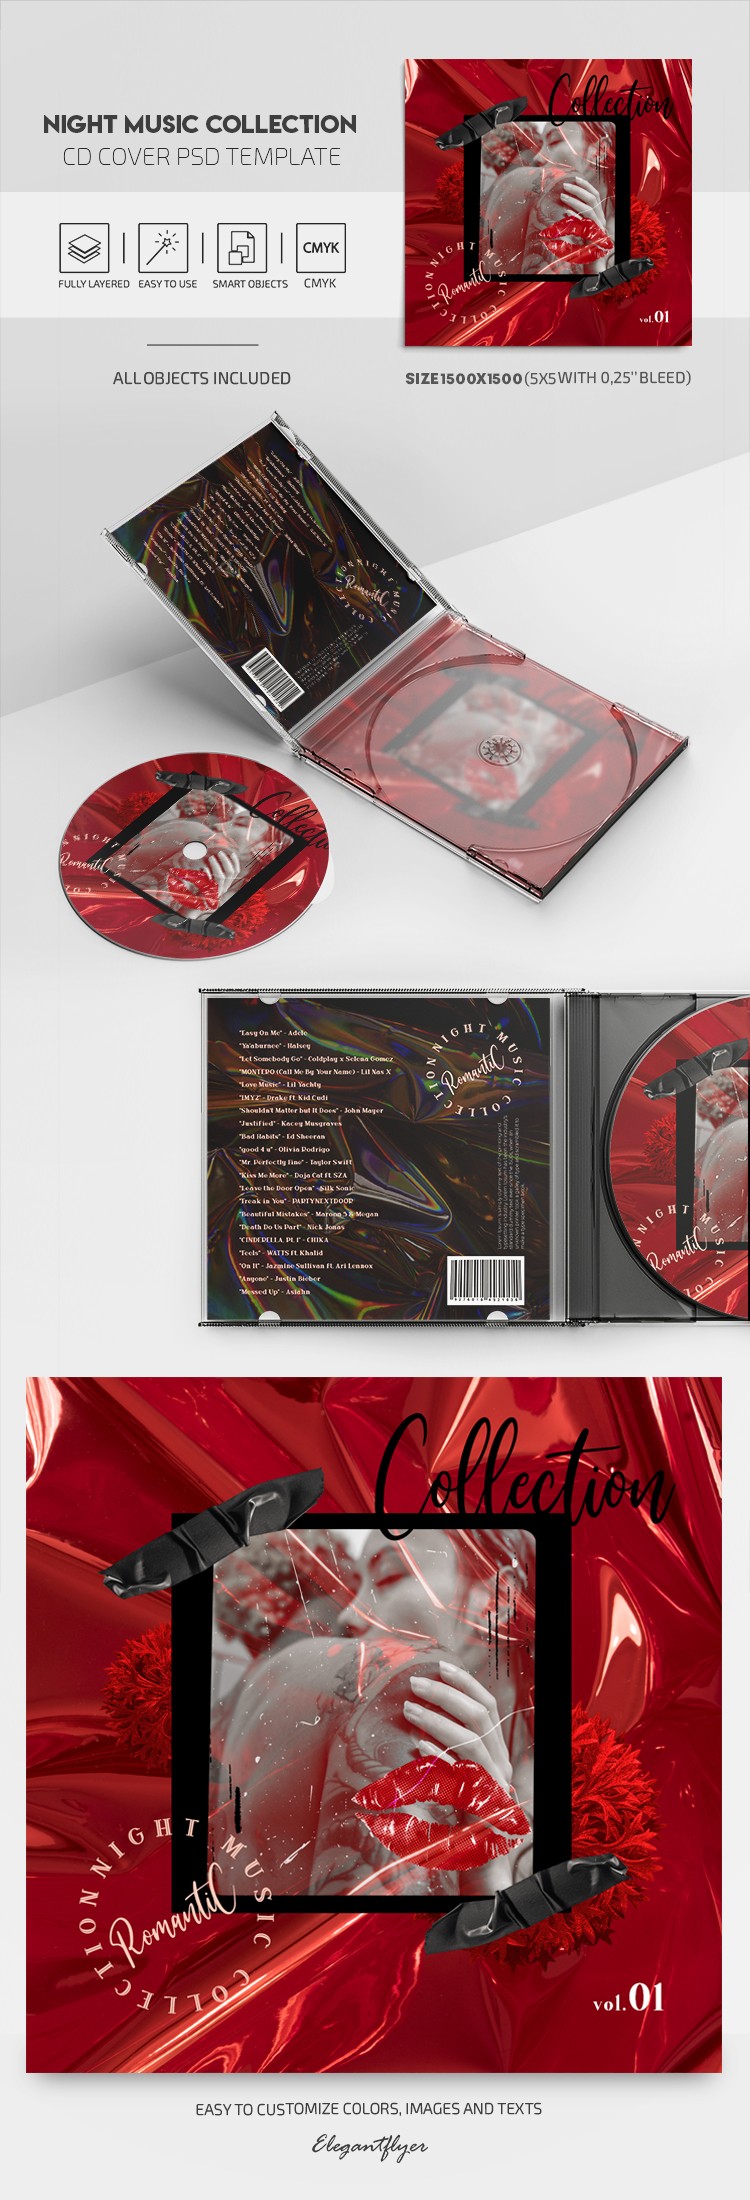 Collezione di musica notturna - Copertina del CD by ElegantFlyer